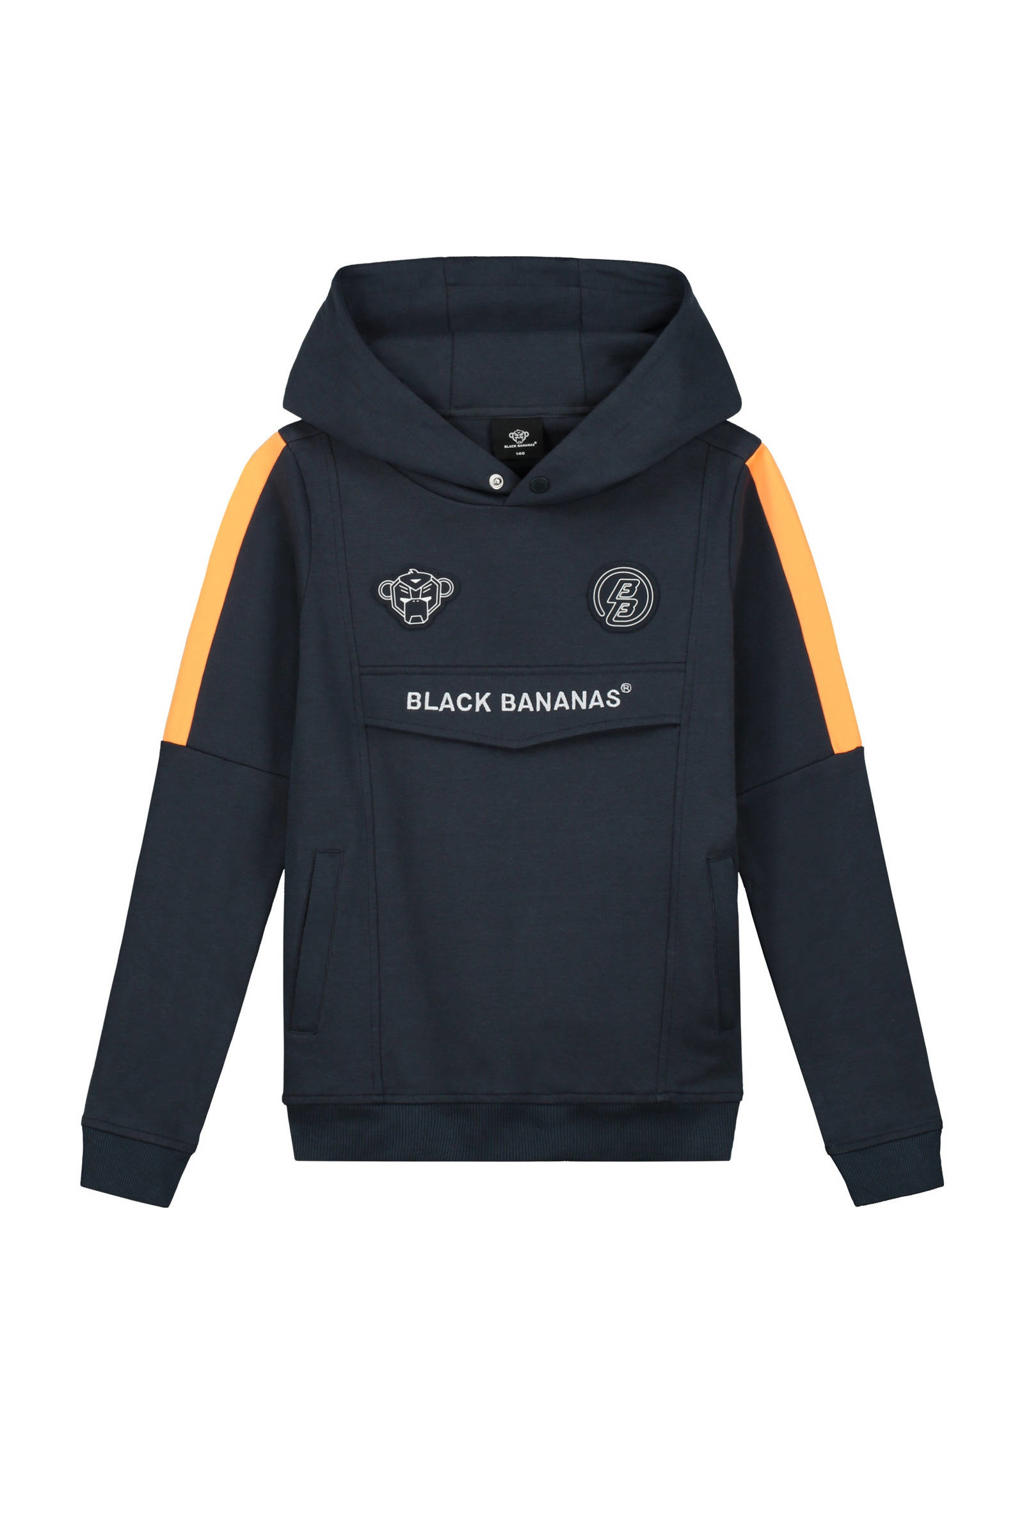 BLACK BANANAS hoodie donkerblauw/oranje